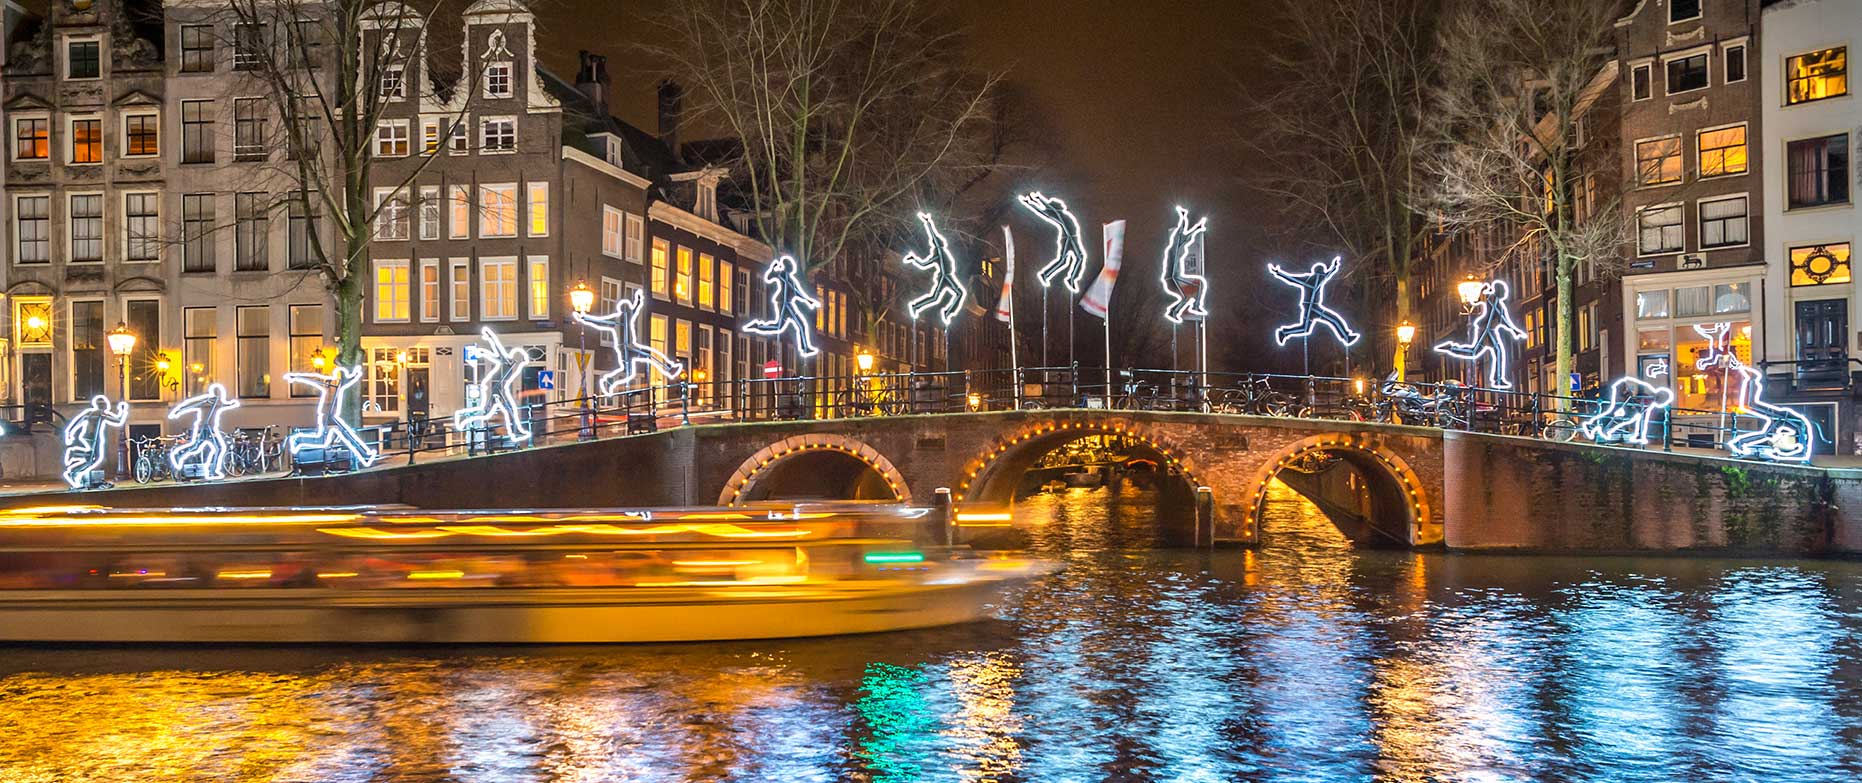 christmas river cruise amsterdam